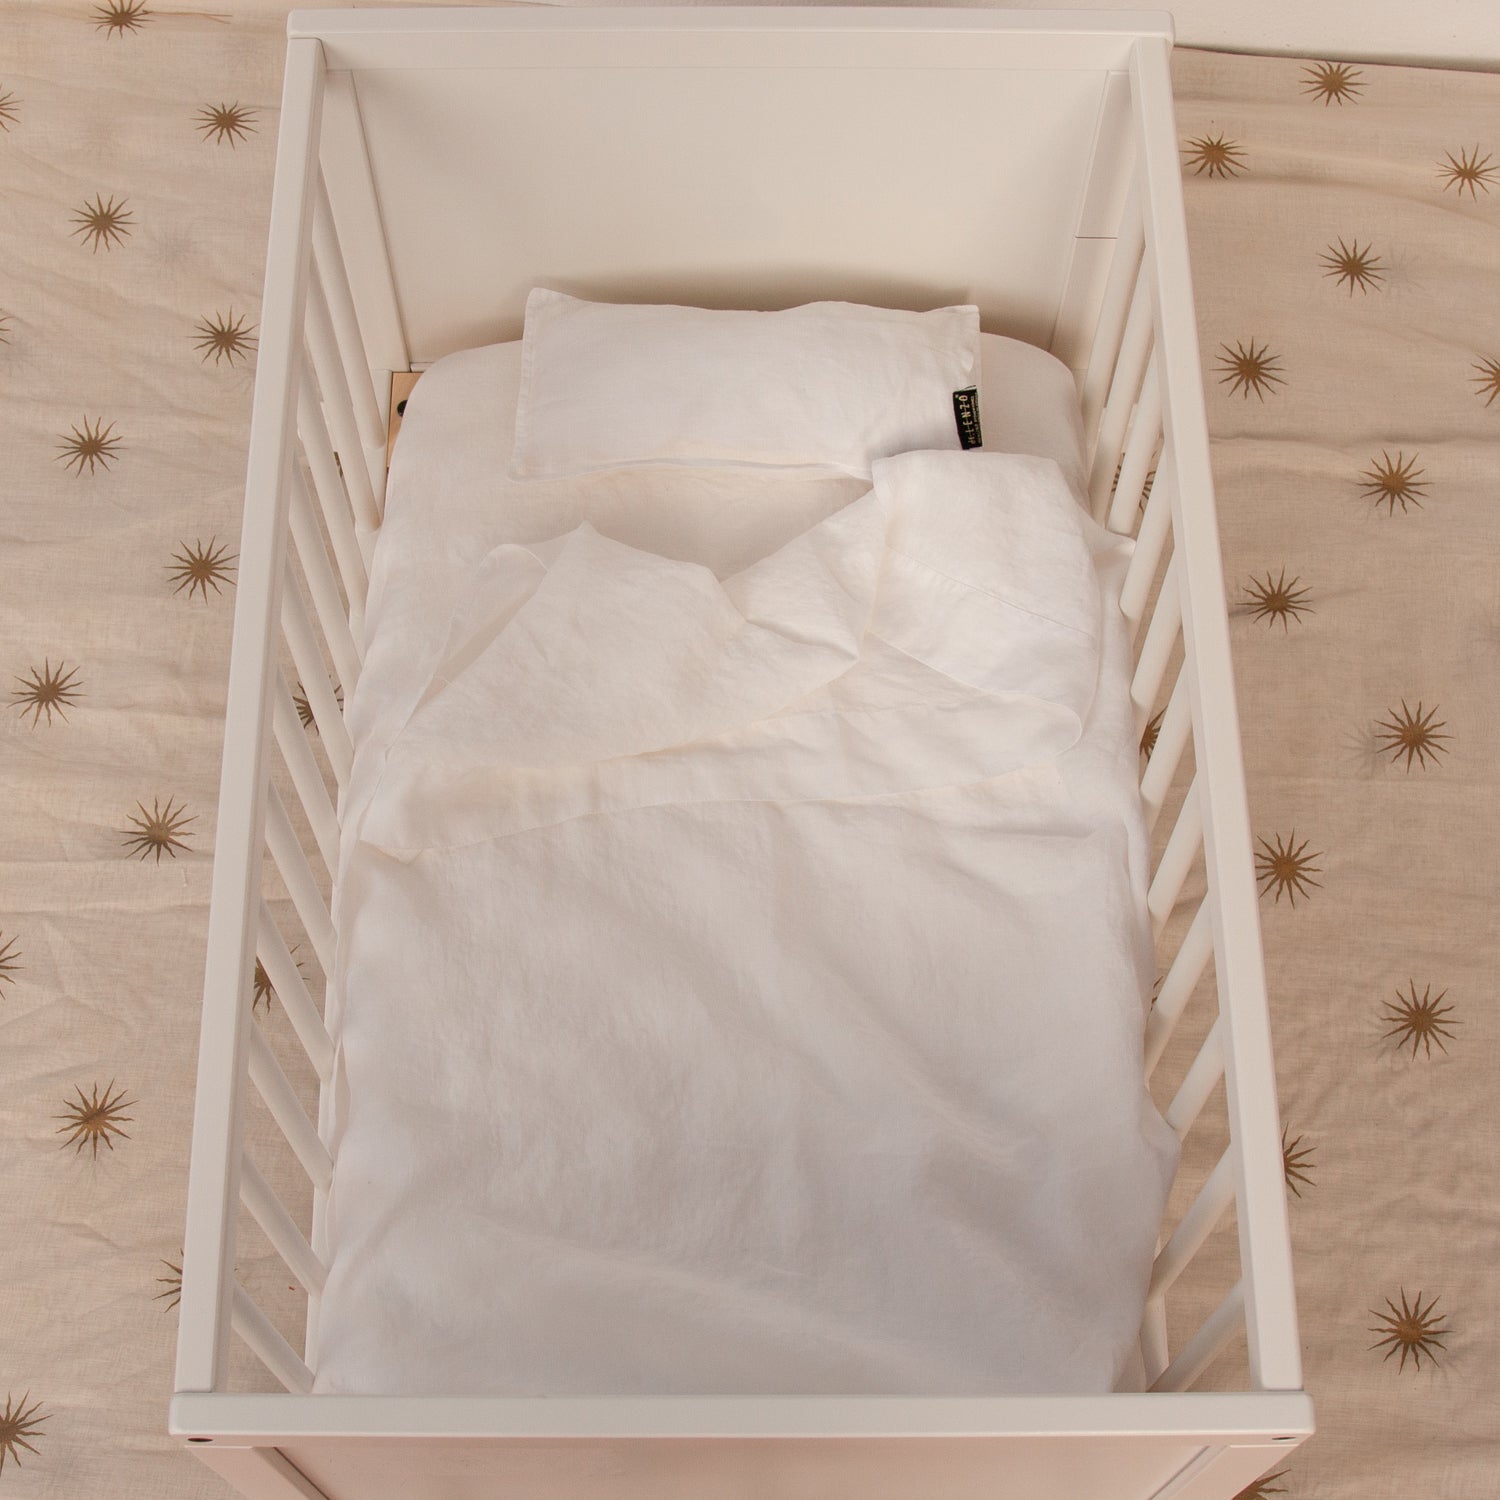 BASIC mini crib sheet set